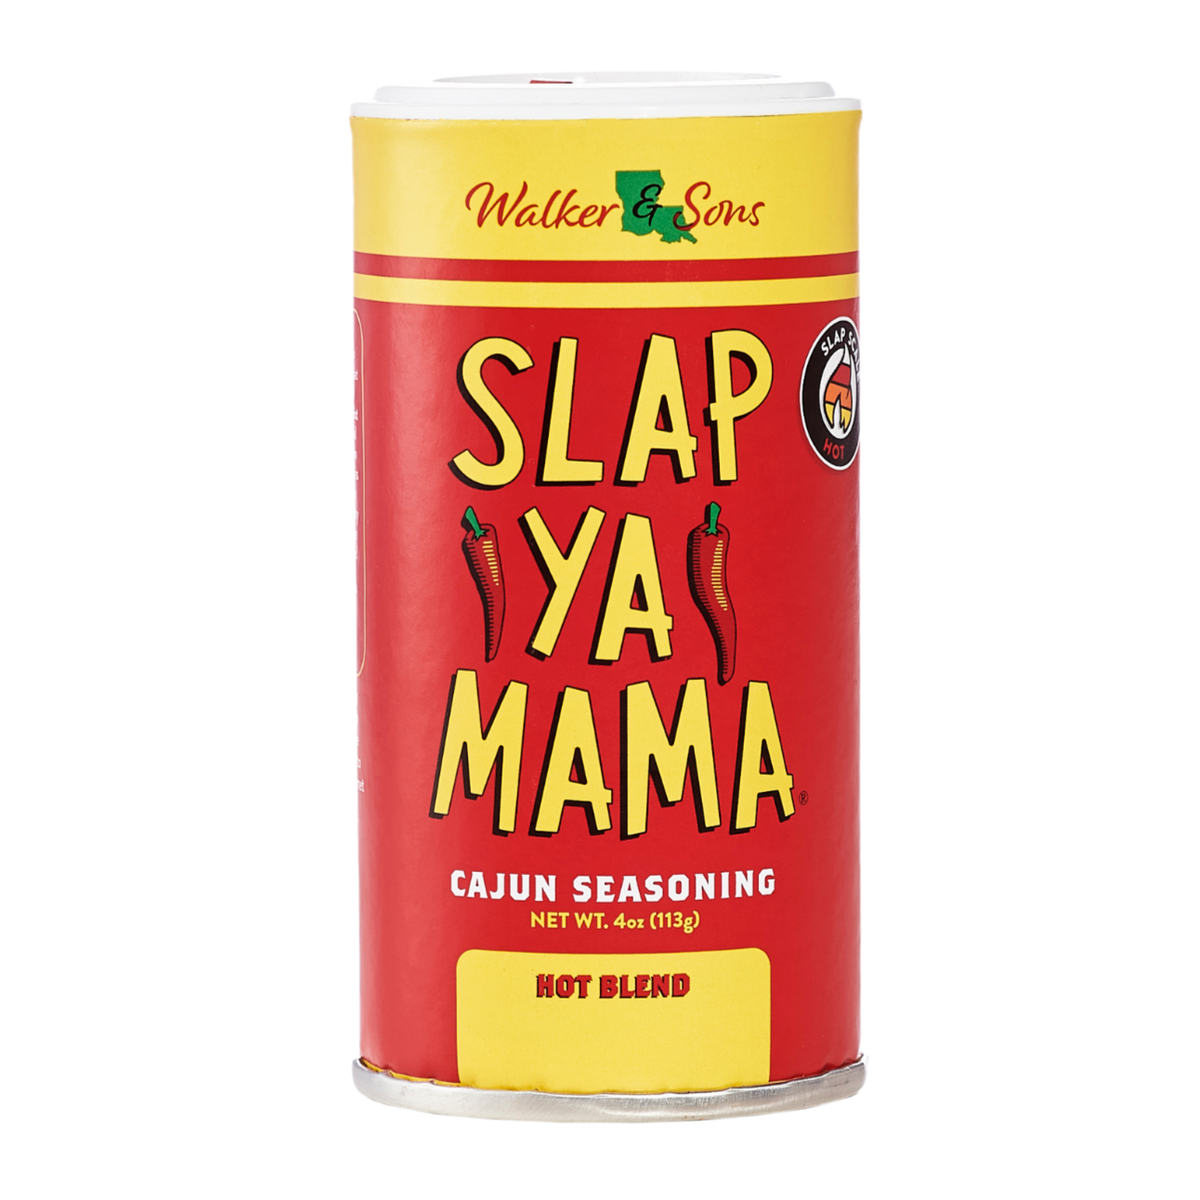 Slap Ya Mama: A Spice for All Seasons